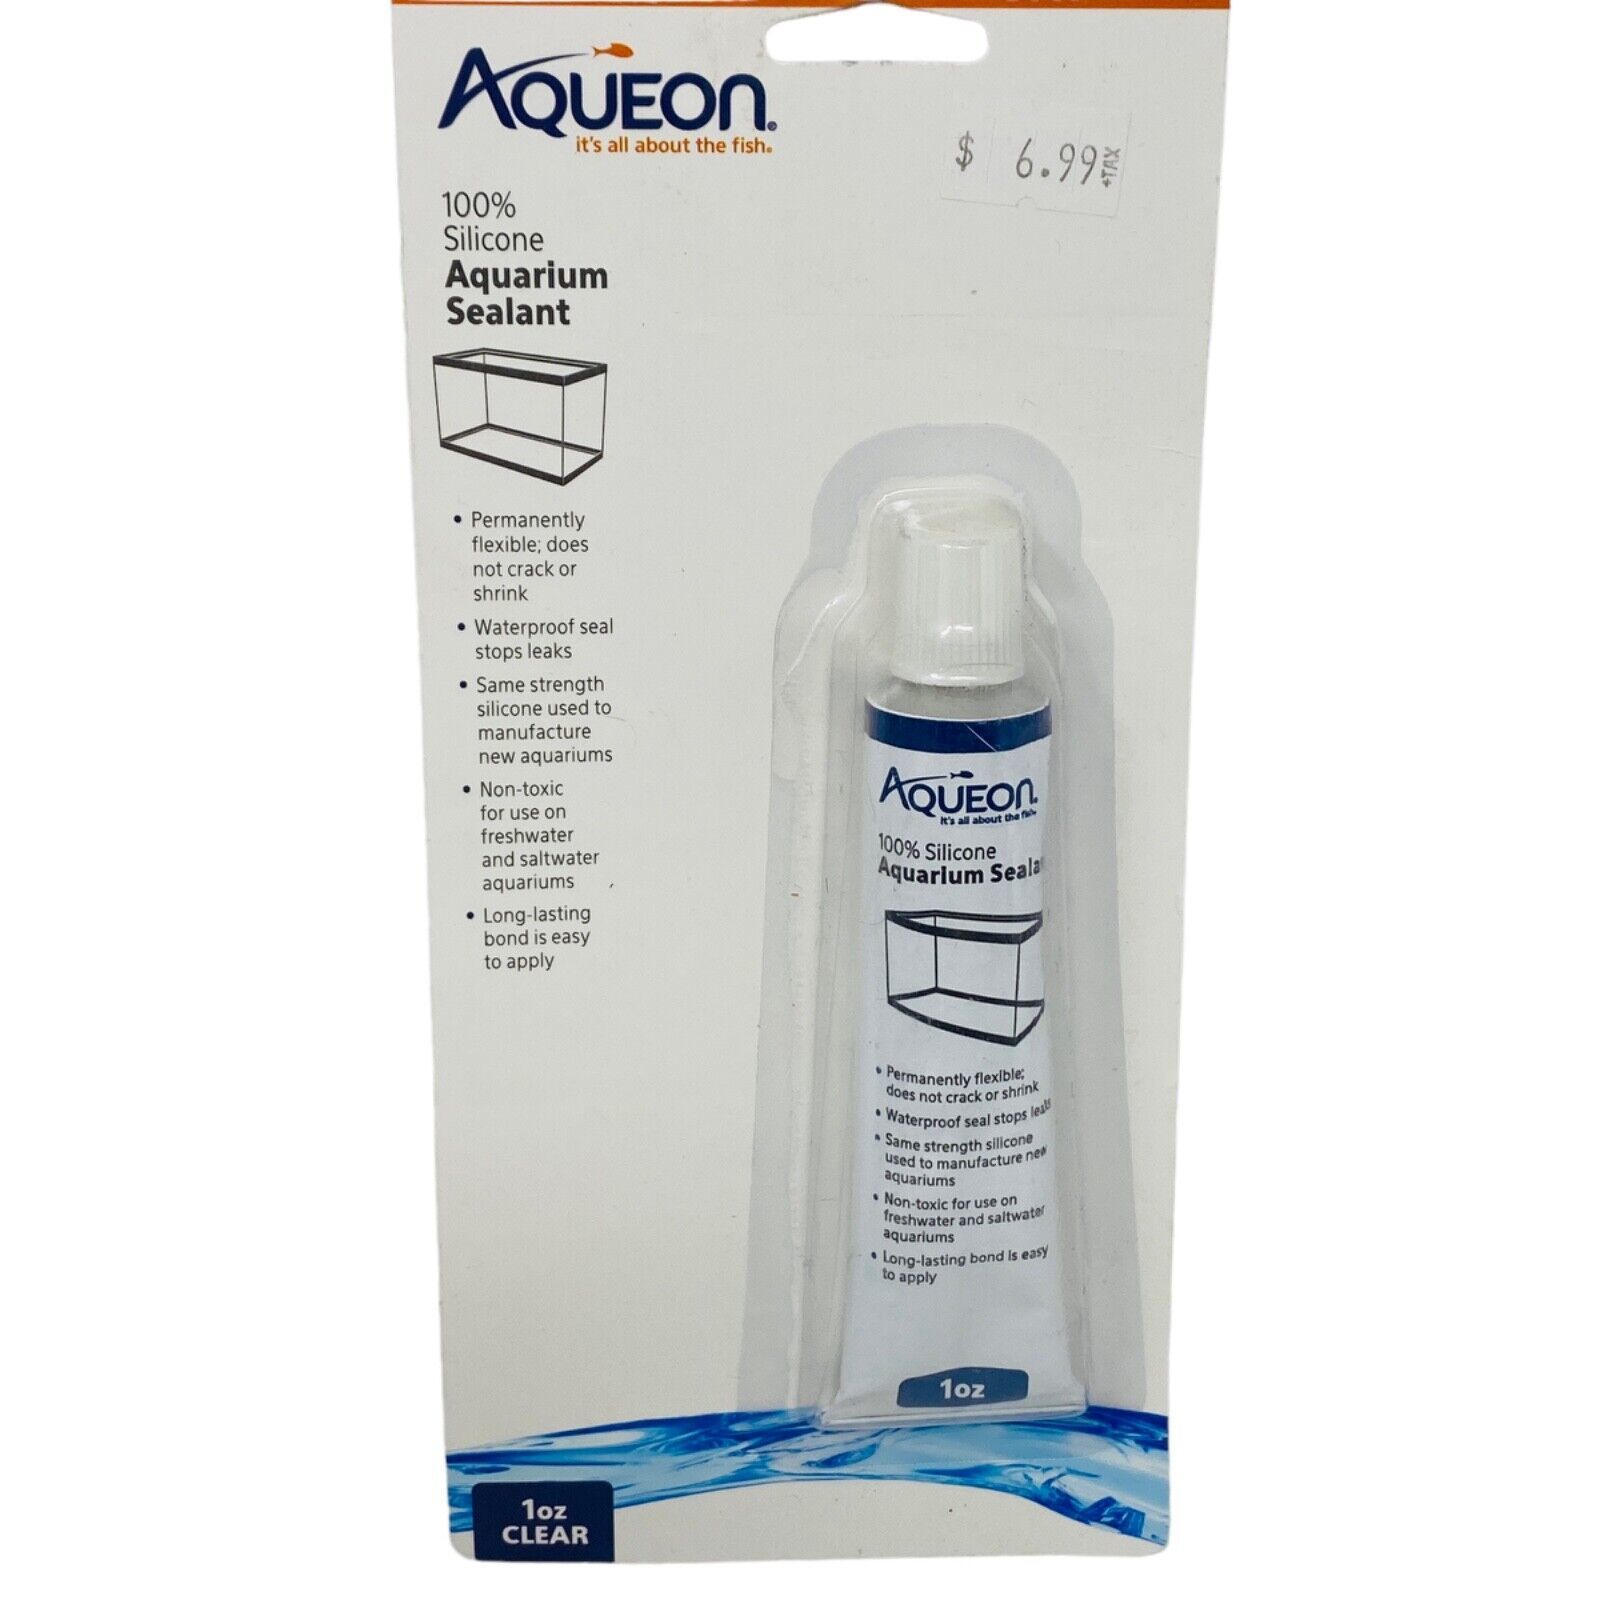 Aqueon 100% Silicone Aquarium Sealant 1oz. clear For Aquariums - $4.94